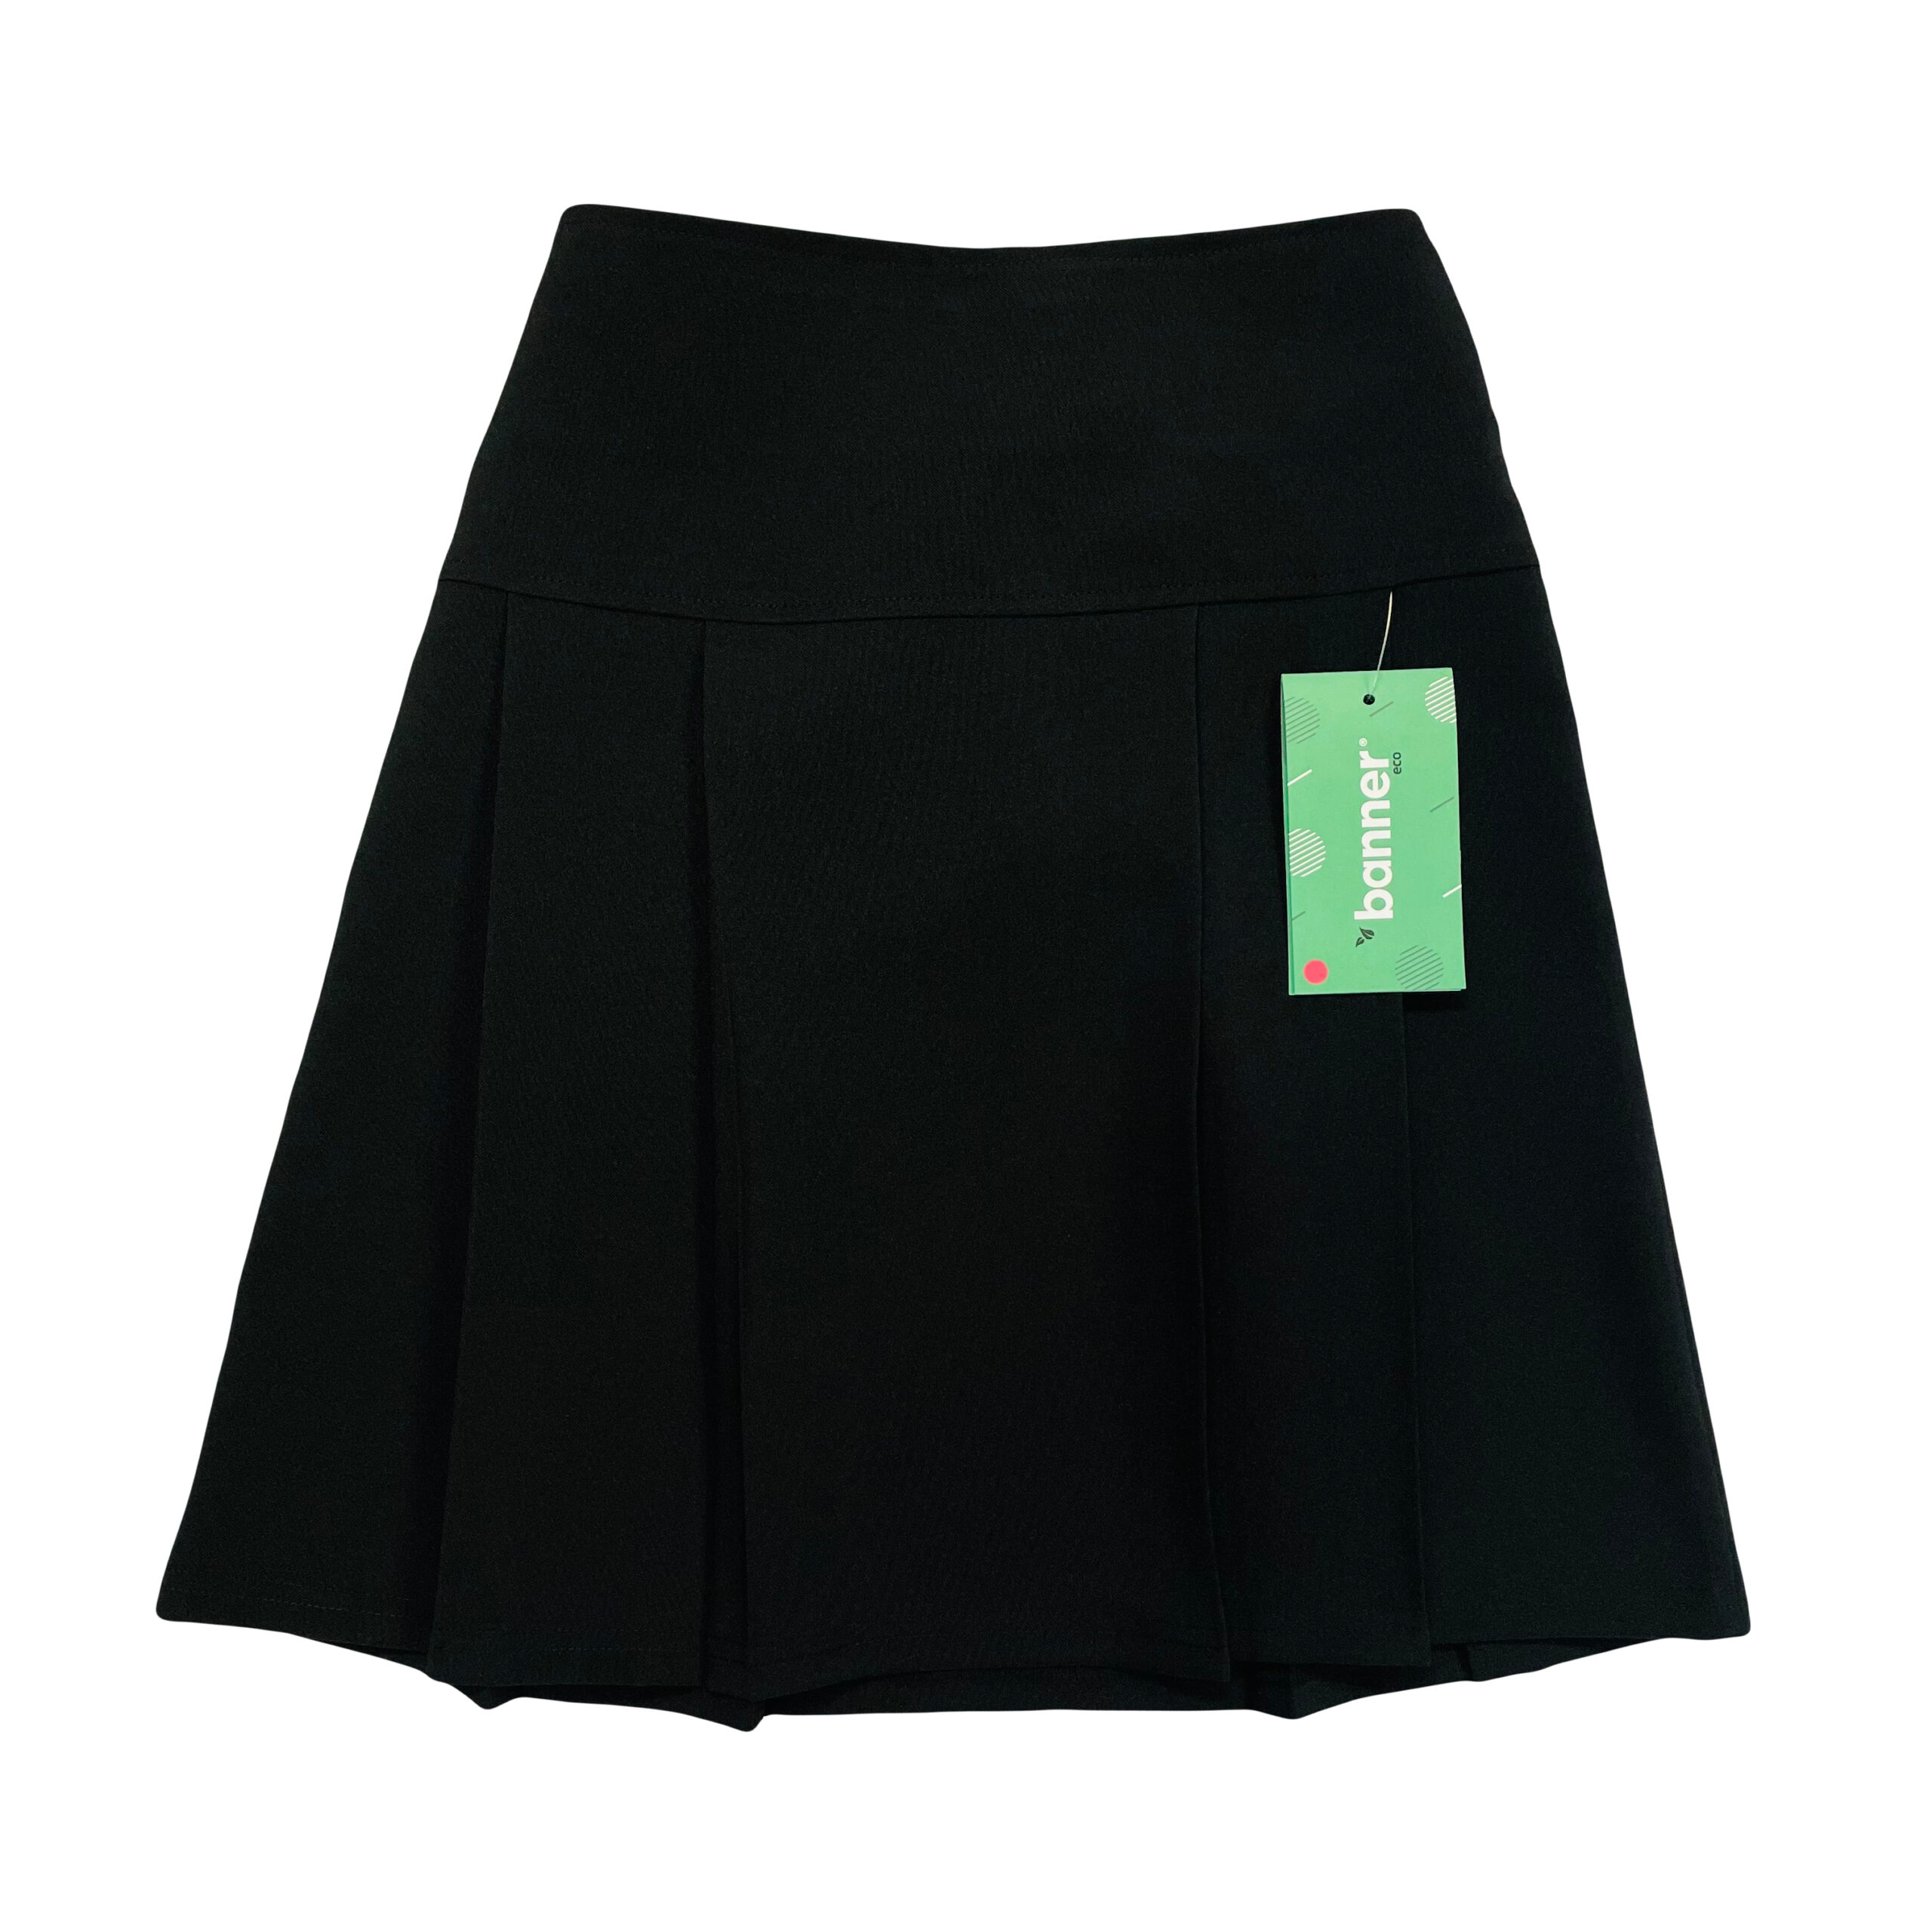 Herne Bay High School Skirt – Zipped